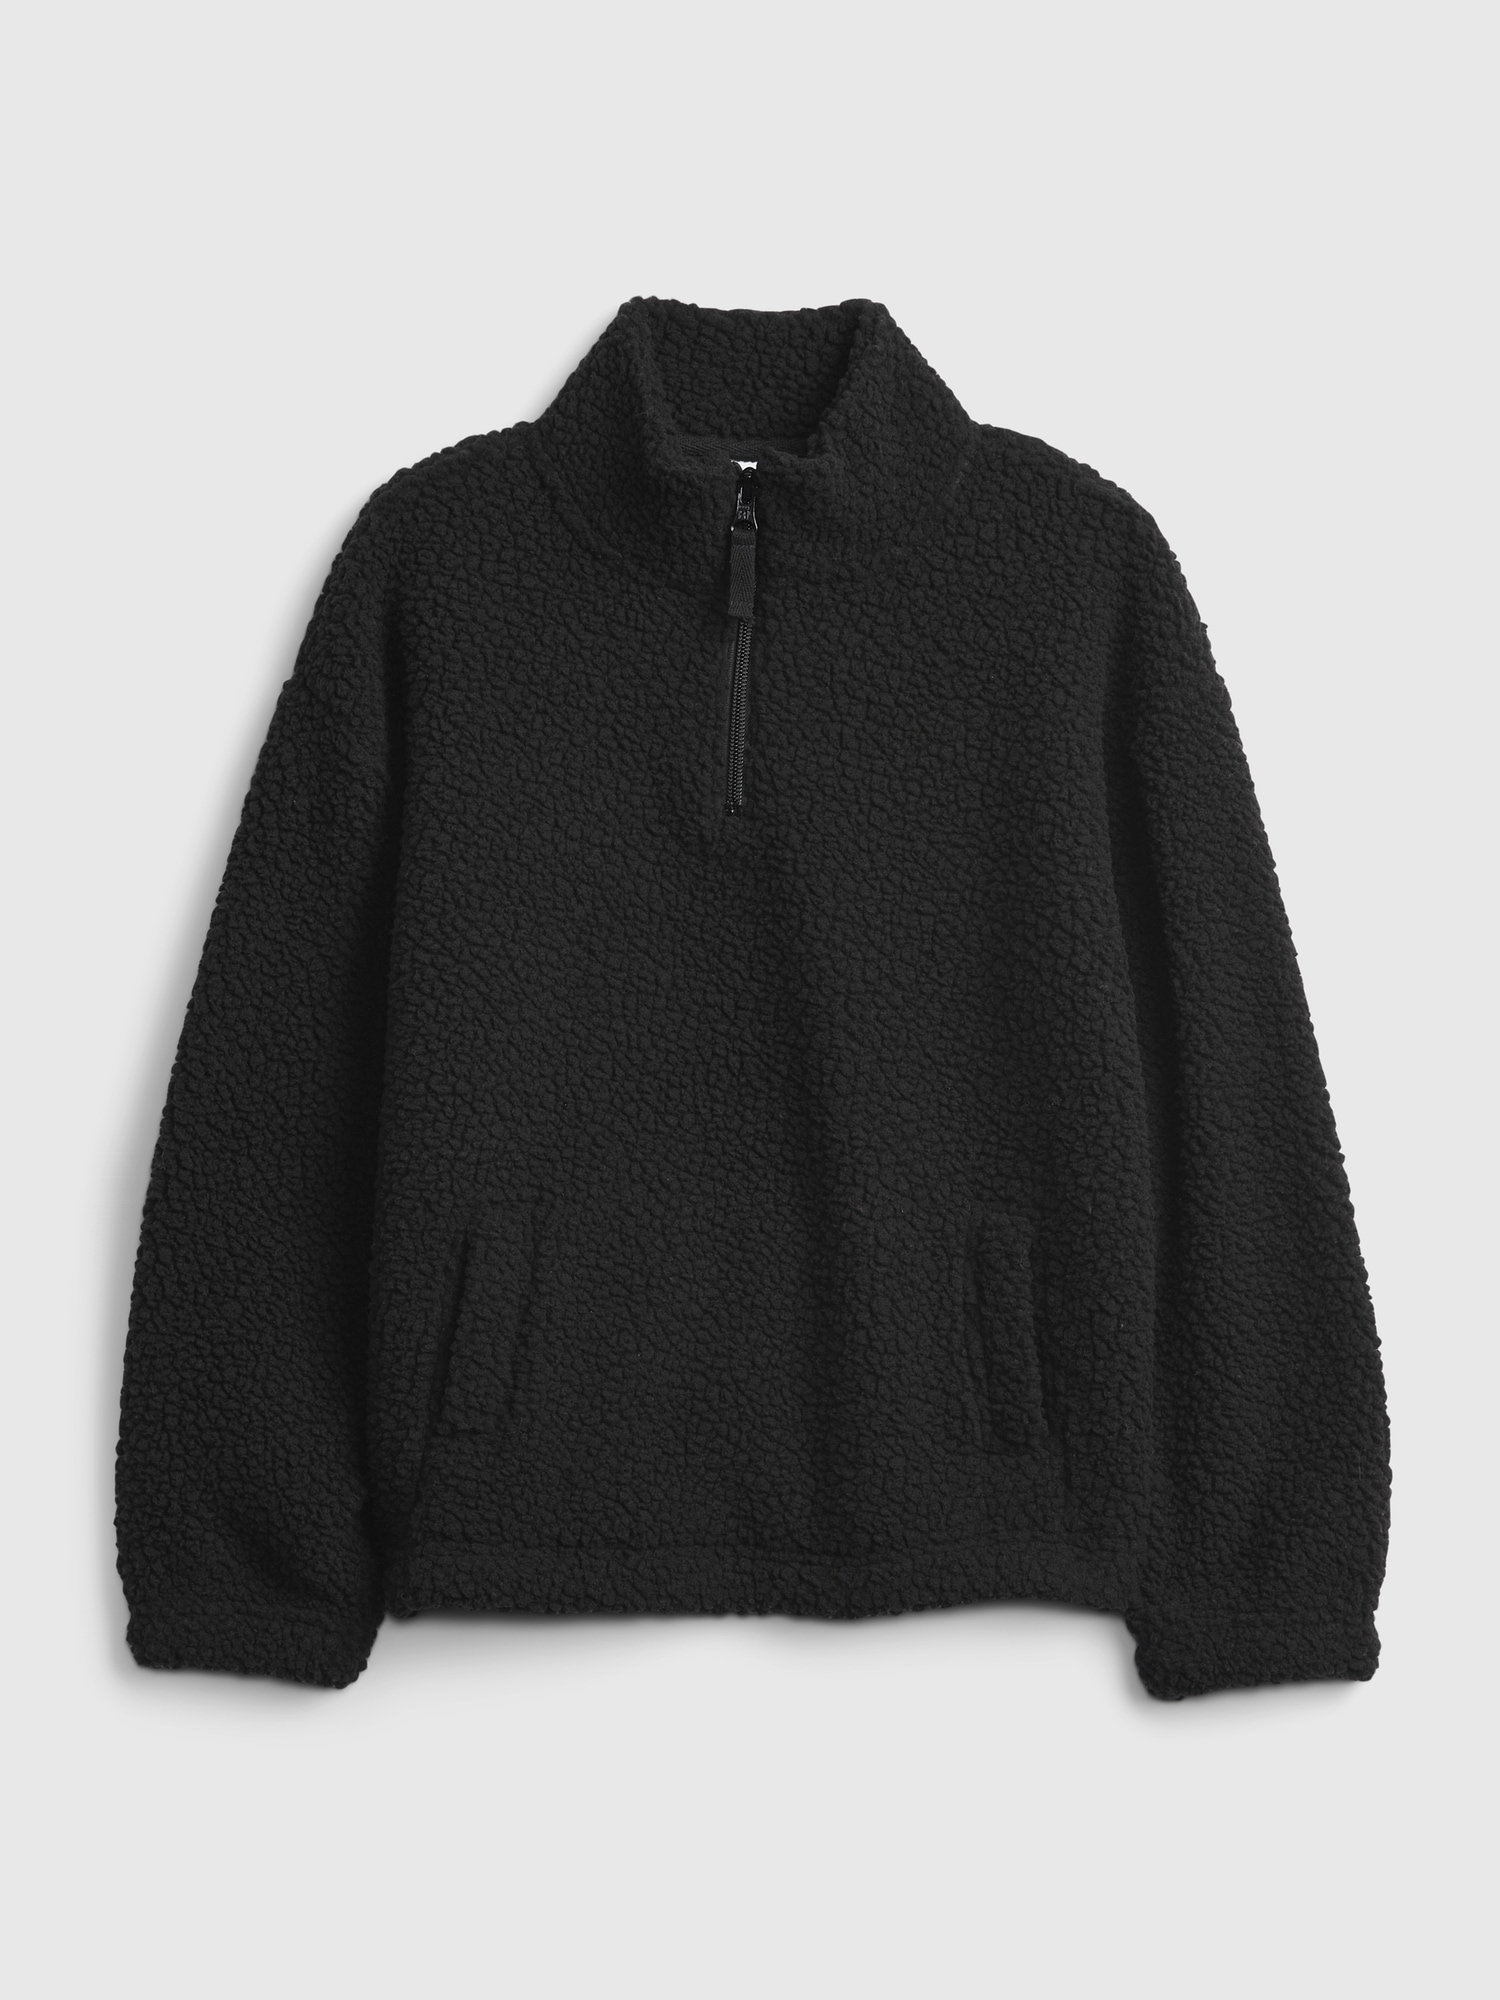 Kids Sherpa Quarter-Zip Sweater